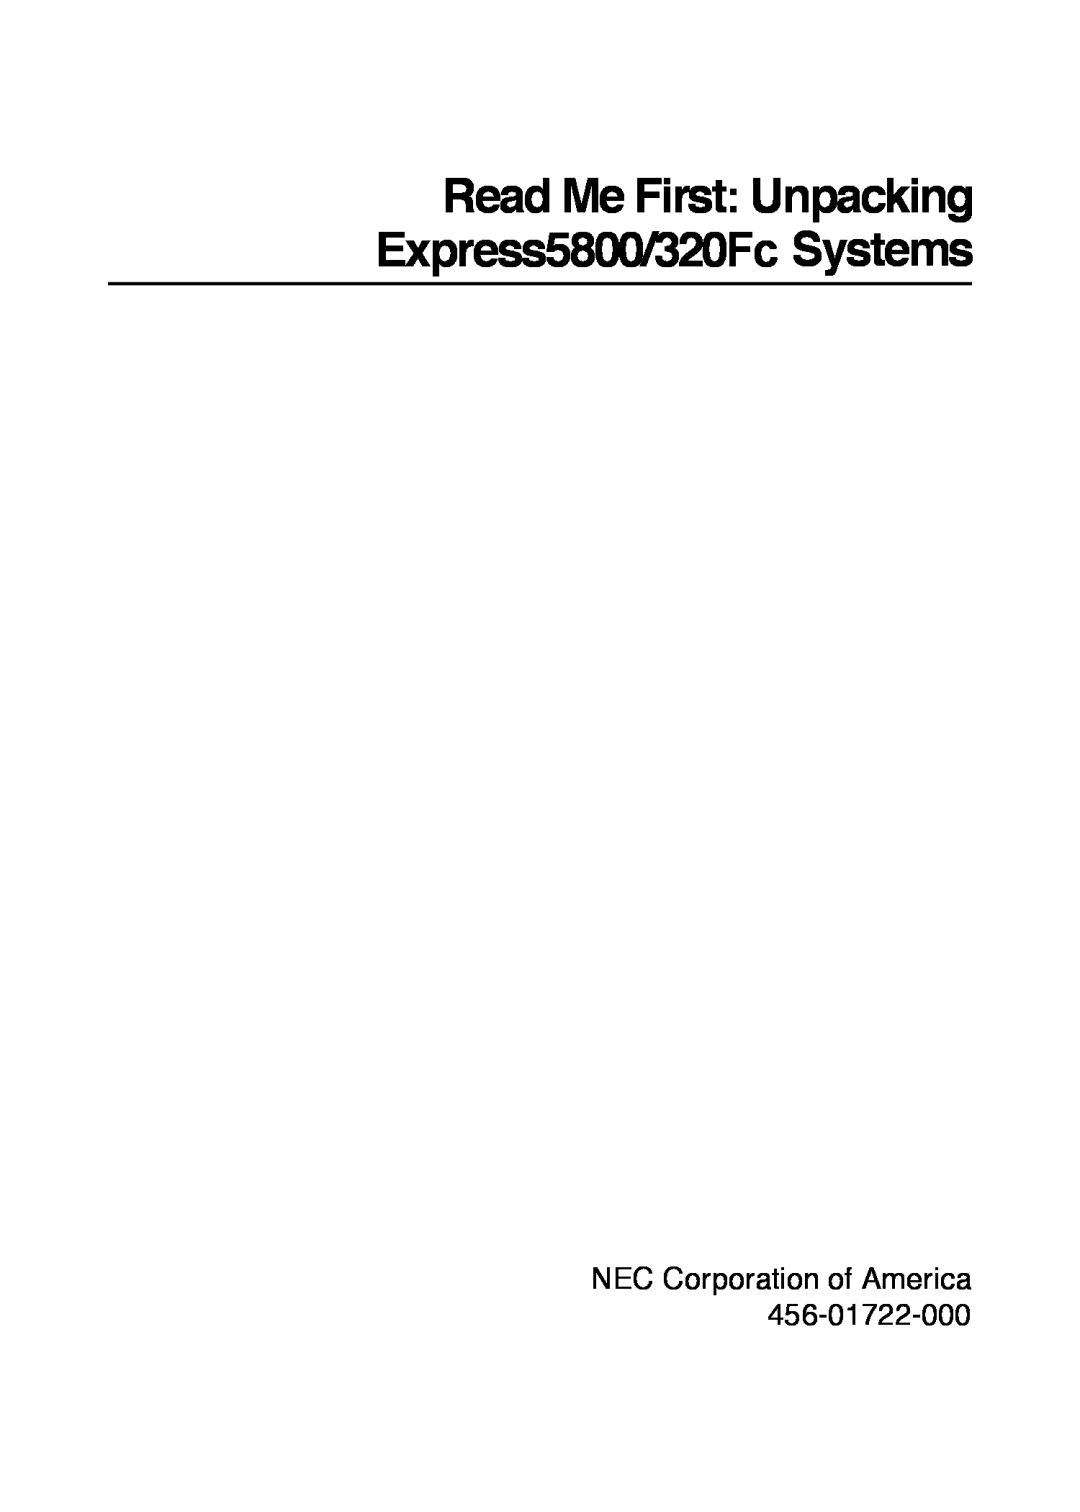 NEC 320Fc Systems manual NEC Corporation of America 